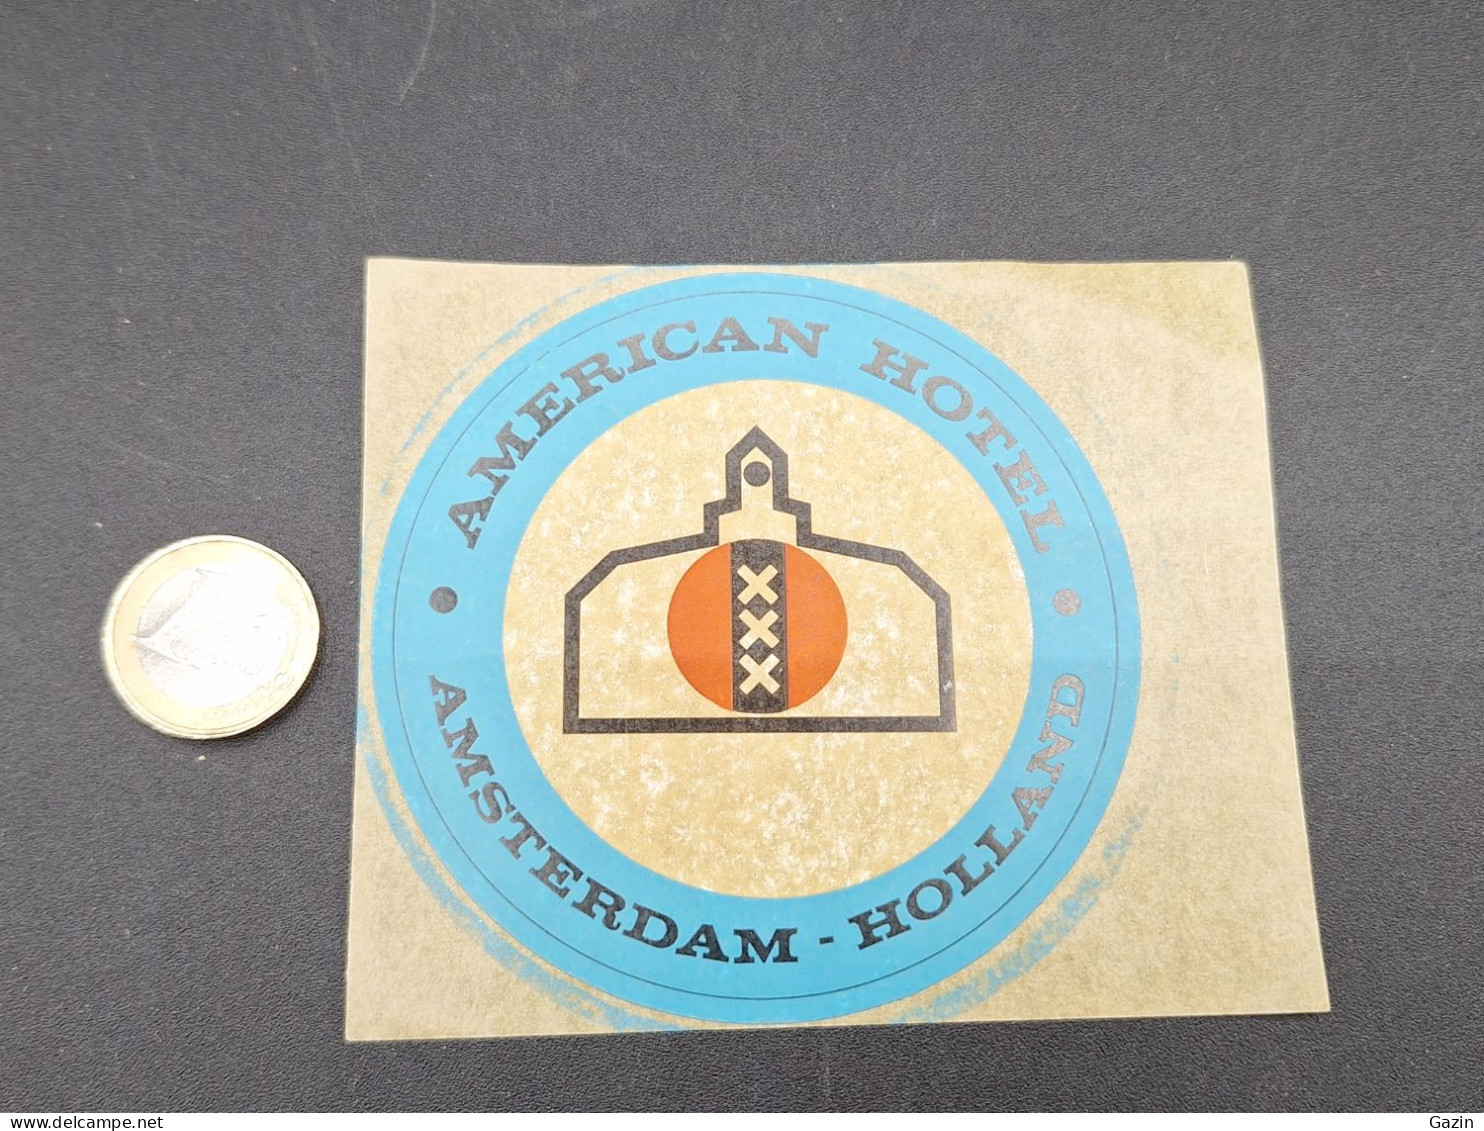 C7/3 - Hotel American * Amesterdam - Holland *  Luggage Lable * Rótulo * Etiqueta - Hotel Labels